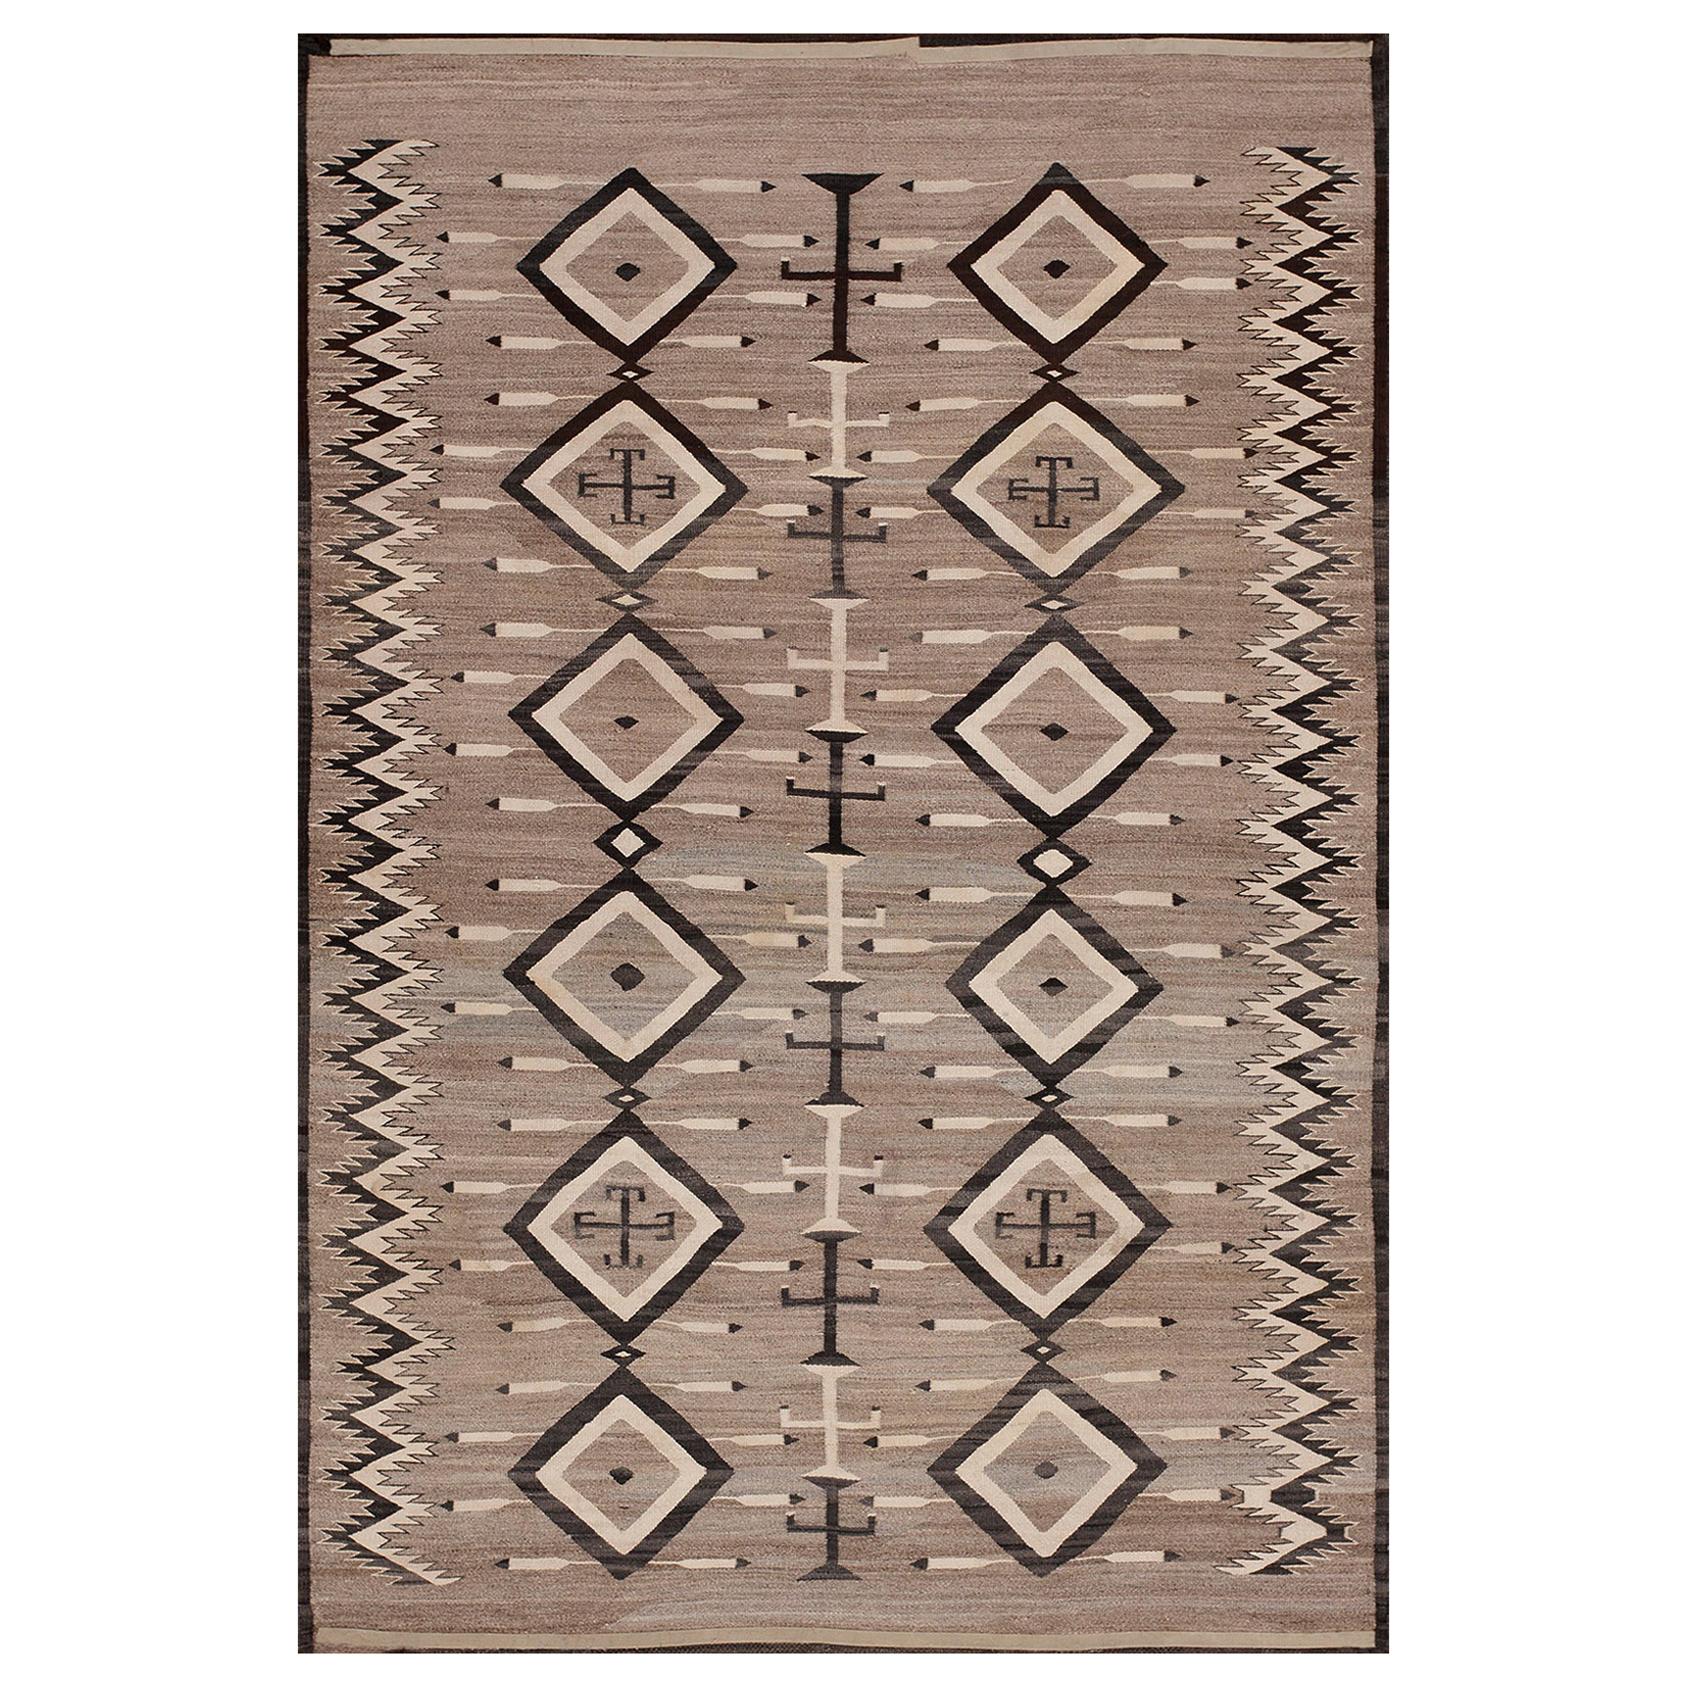 Early 20th Century American Navajo Carpet ( 4'6" x 6'8" - 137 x 203 )